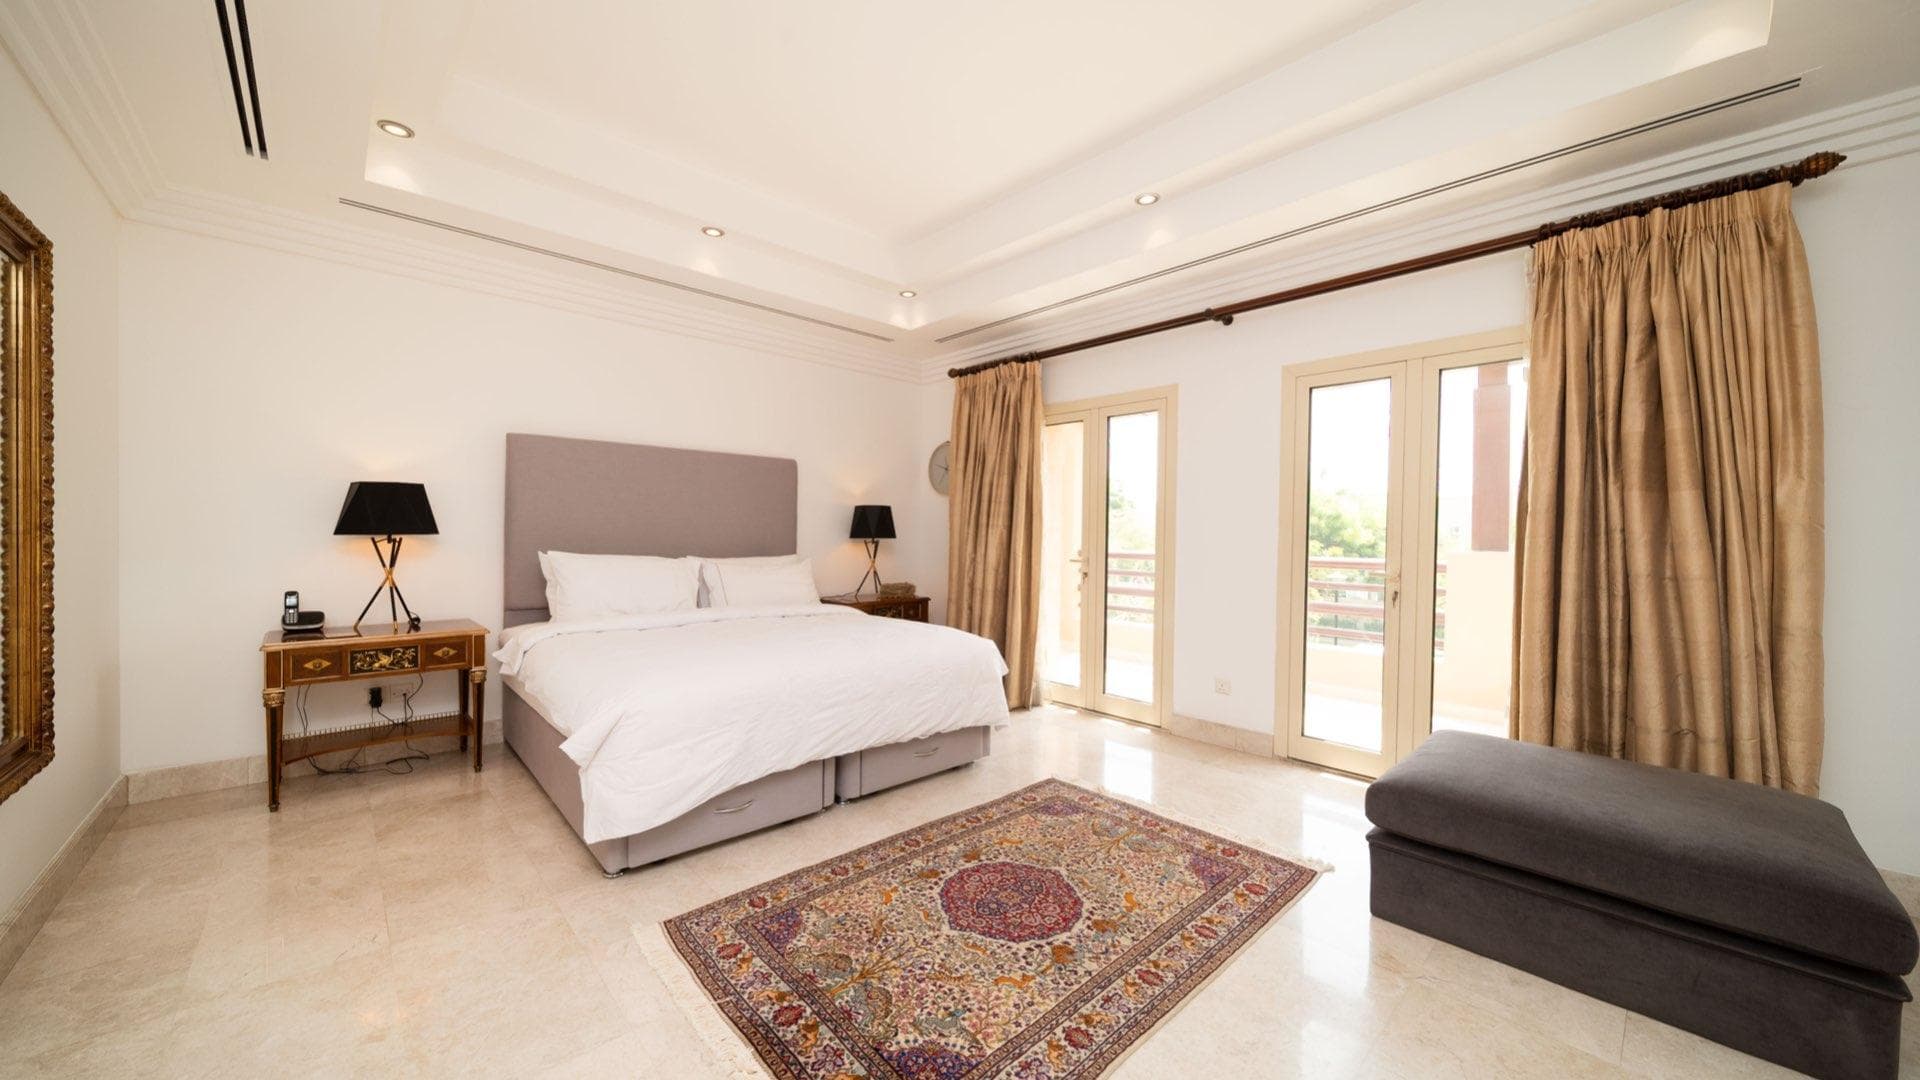 5 Bedroom Villa For Sale Hattan Lp14100 273eb6d67f56de00.jpg